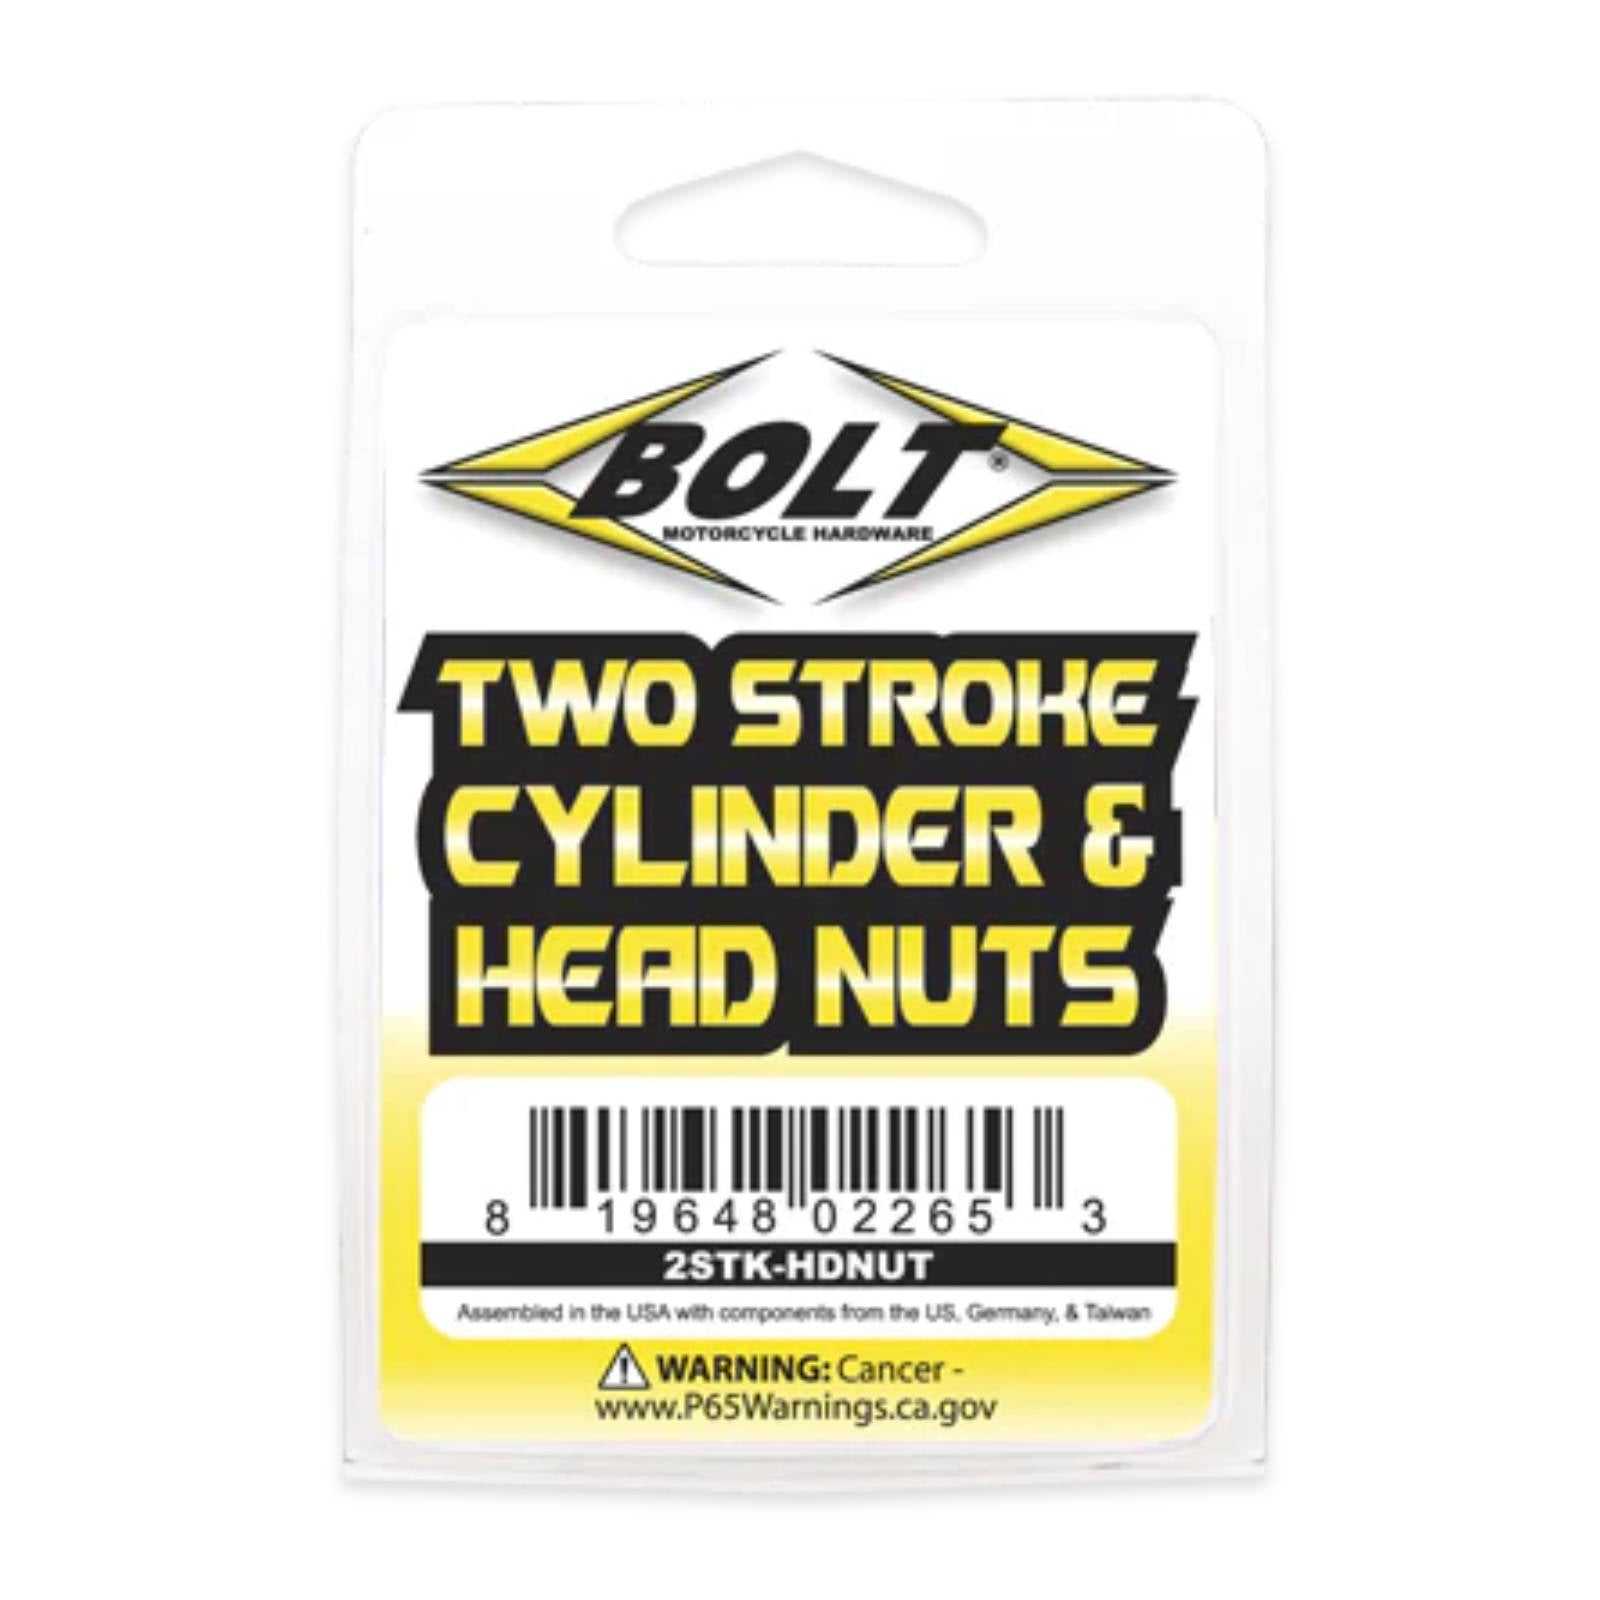 Bolt, 2 STROKE CYLINDER & HEAD NUTS